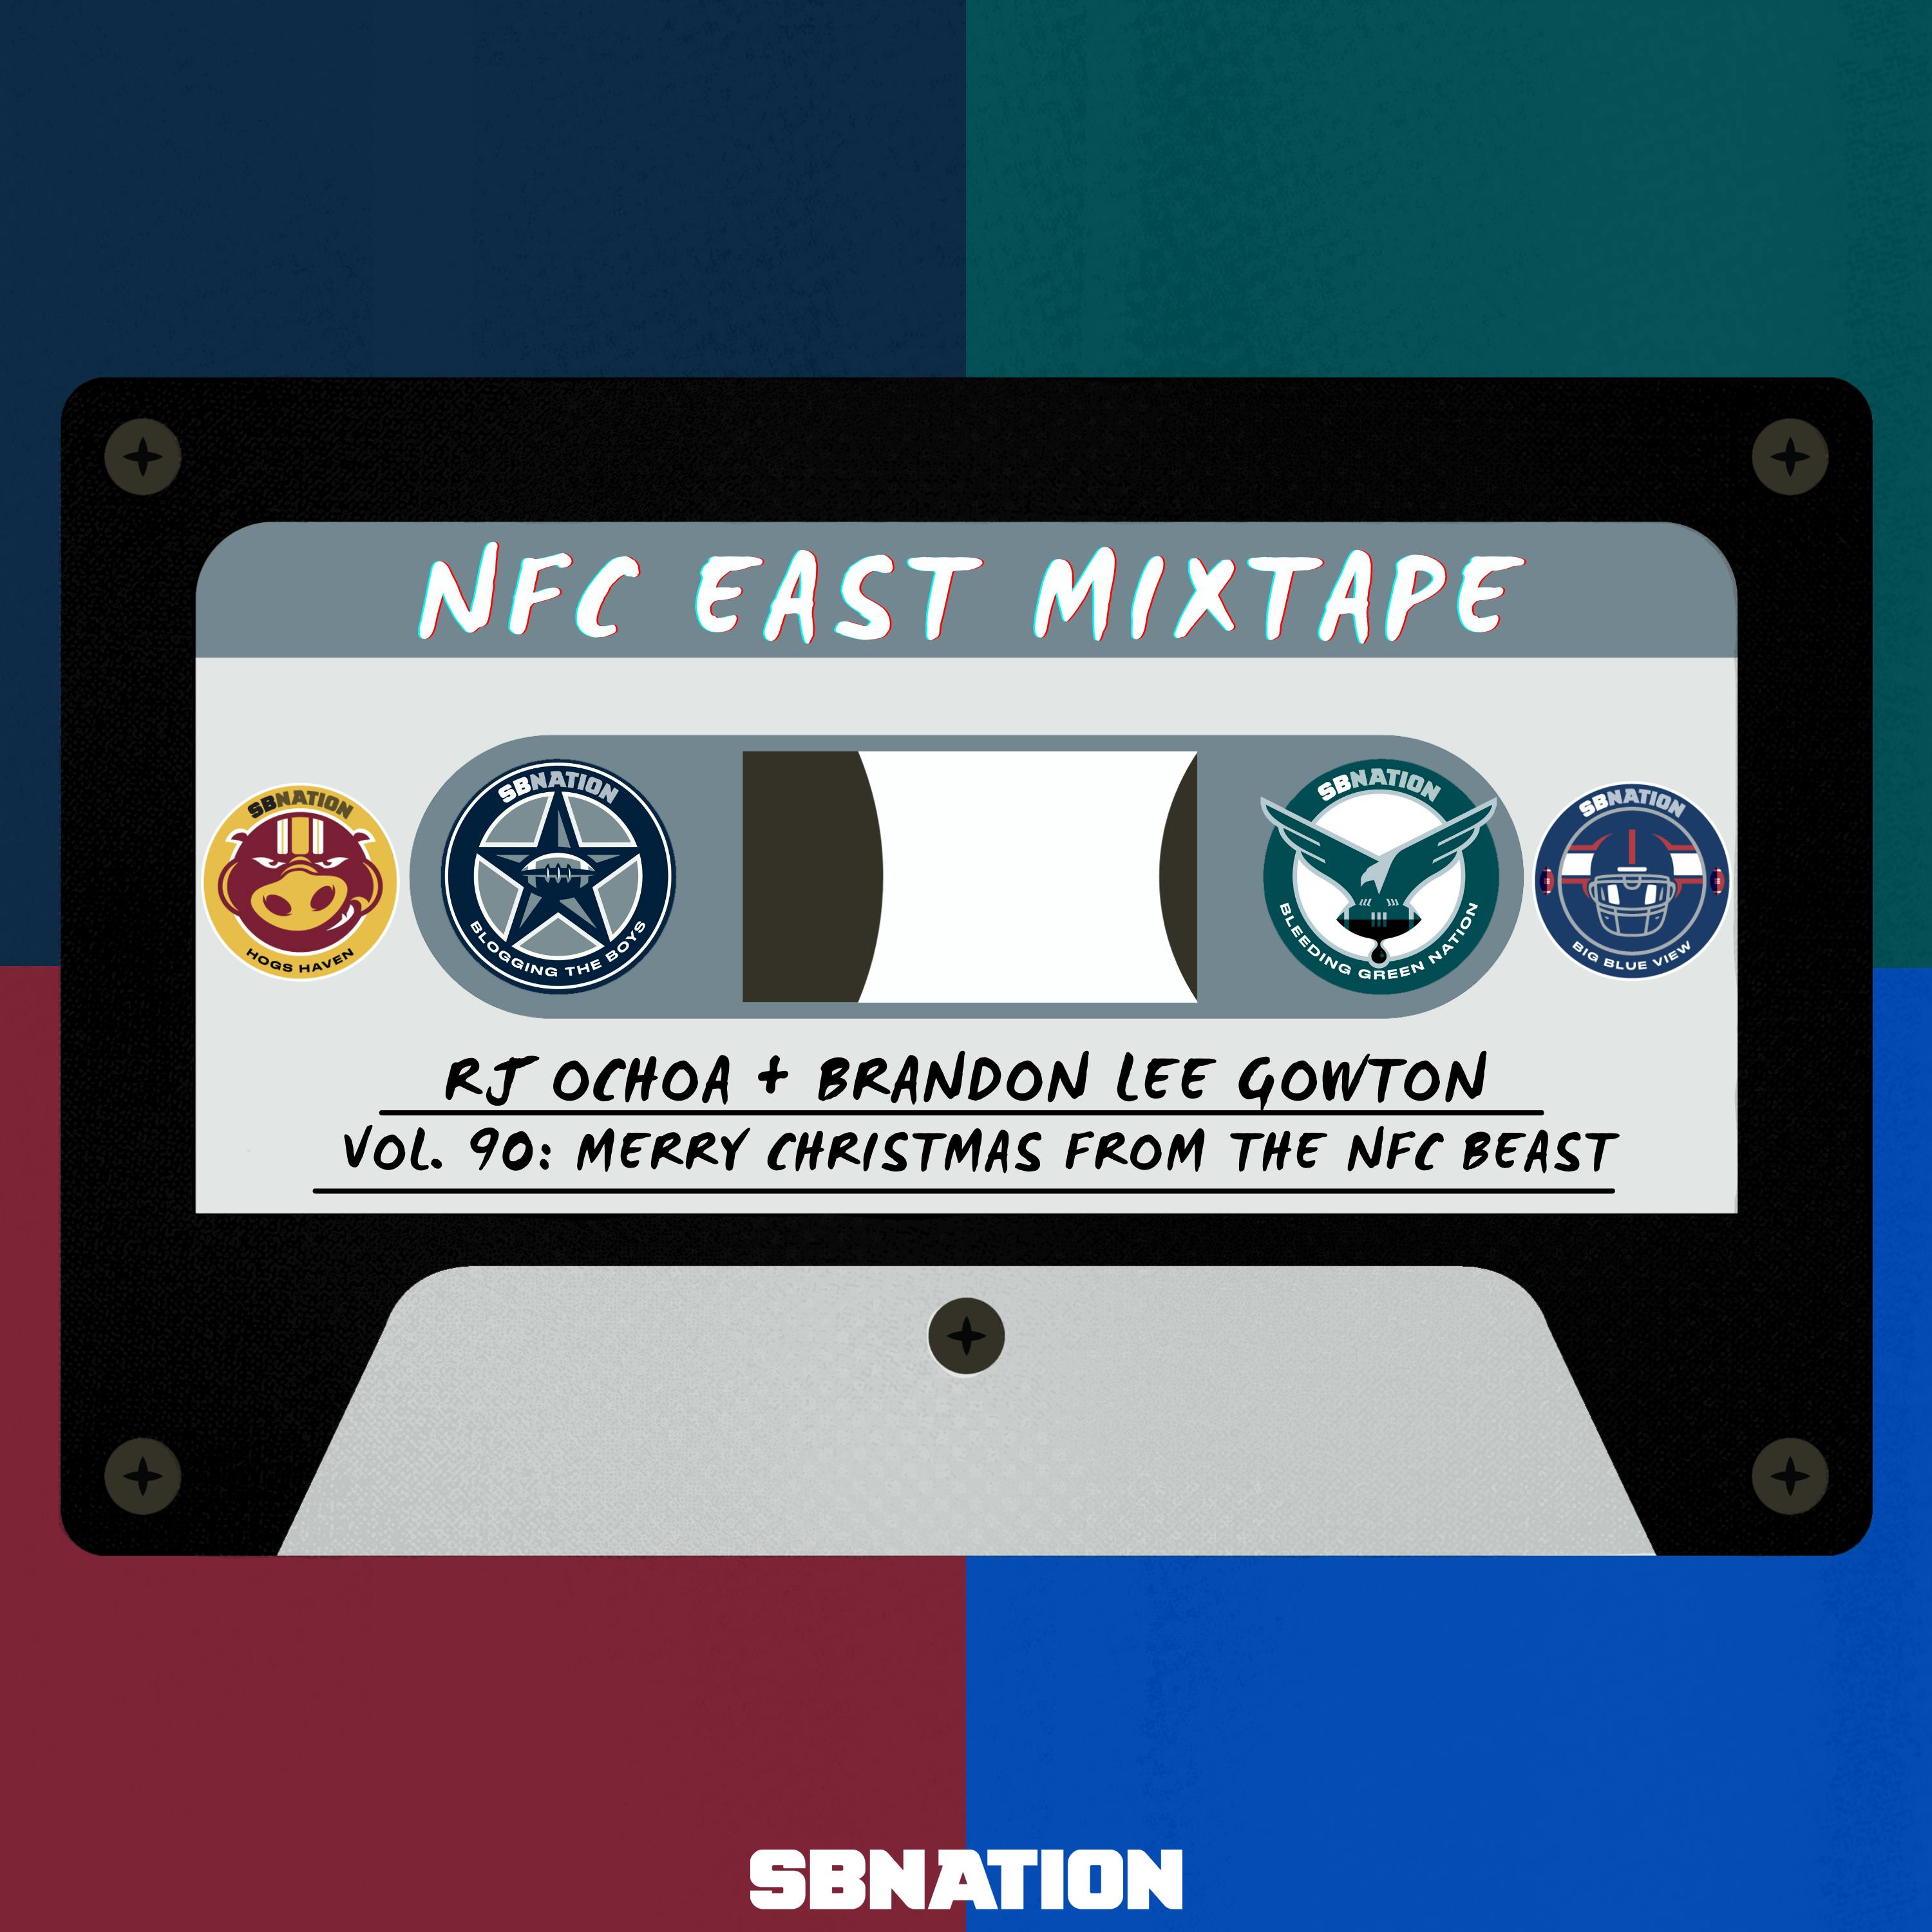 NFC East Mixtape Vol.90: Merry Christmas from the NFC Beast